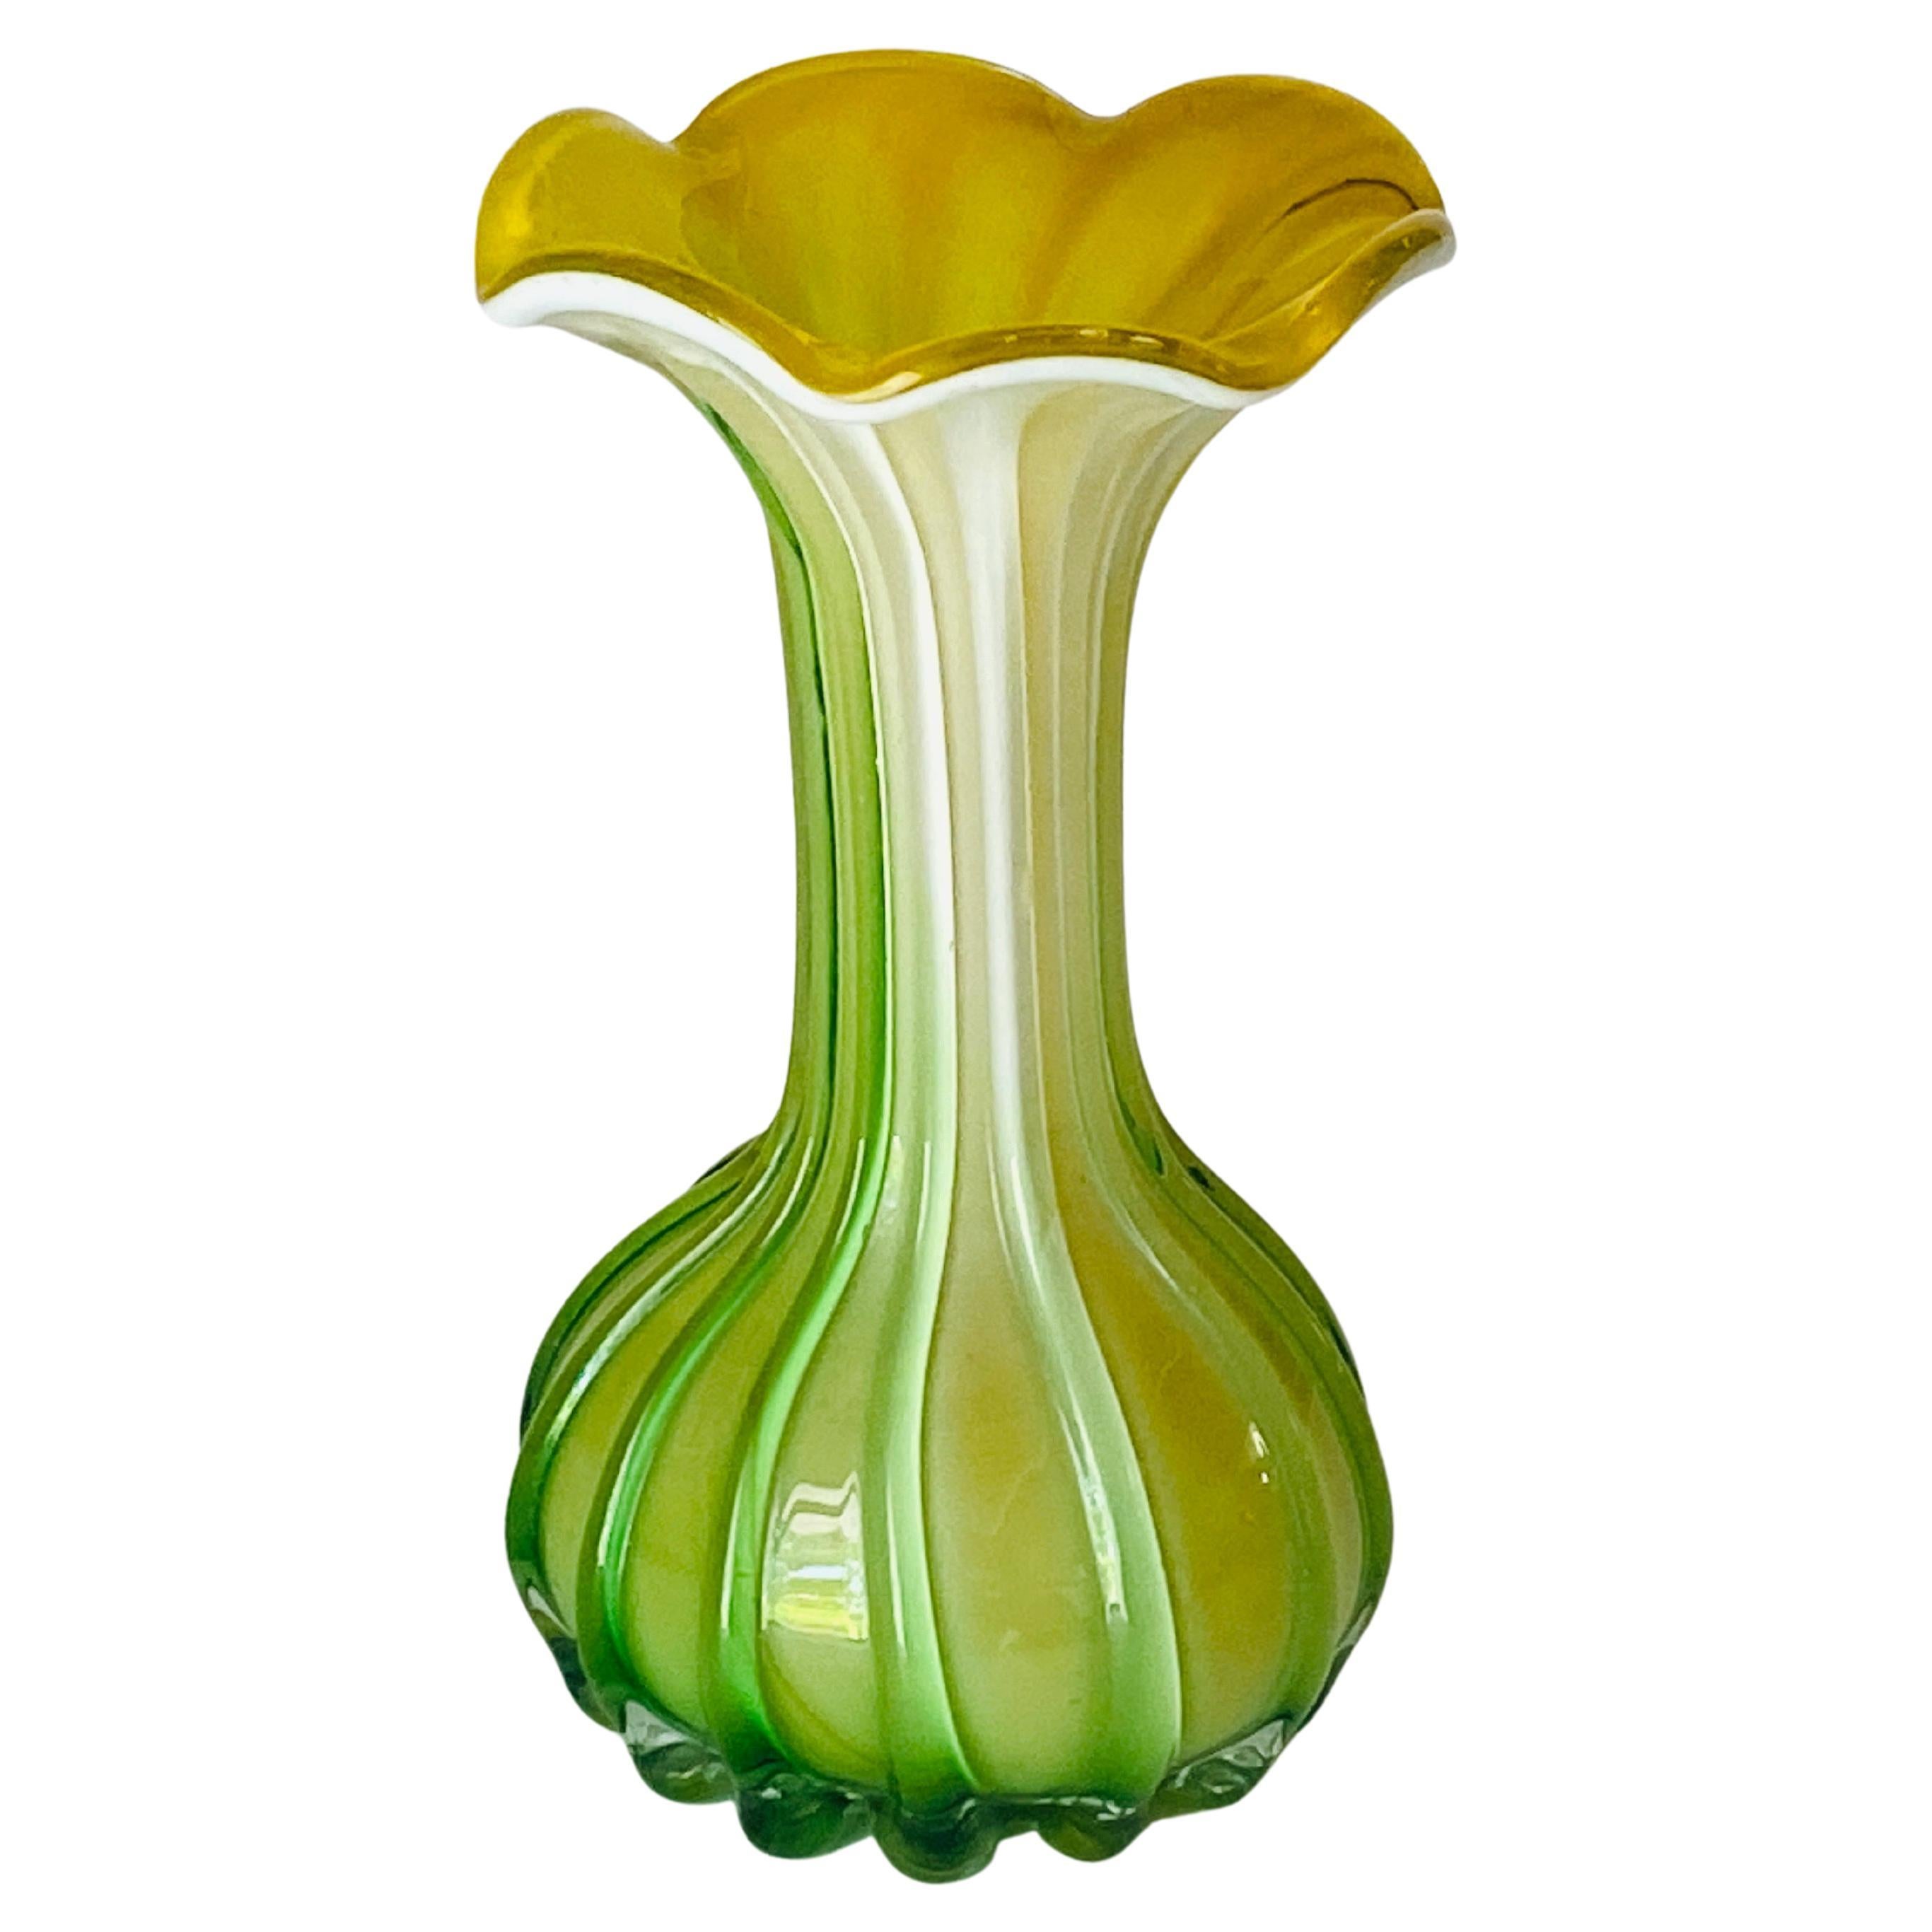 Venitian-Vase im Venini-Stil, 1970, grün und gelb, Venini-Stil